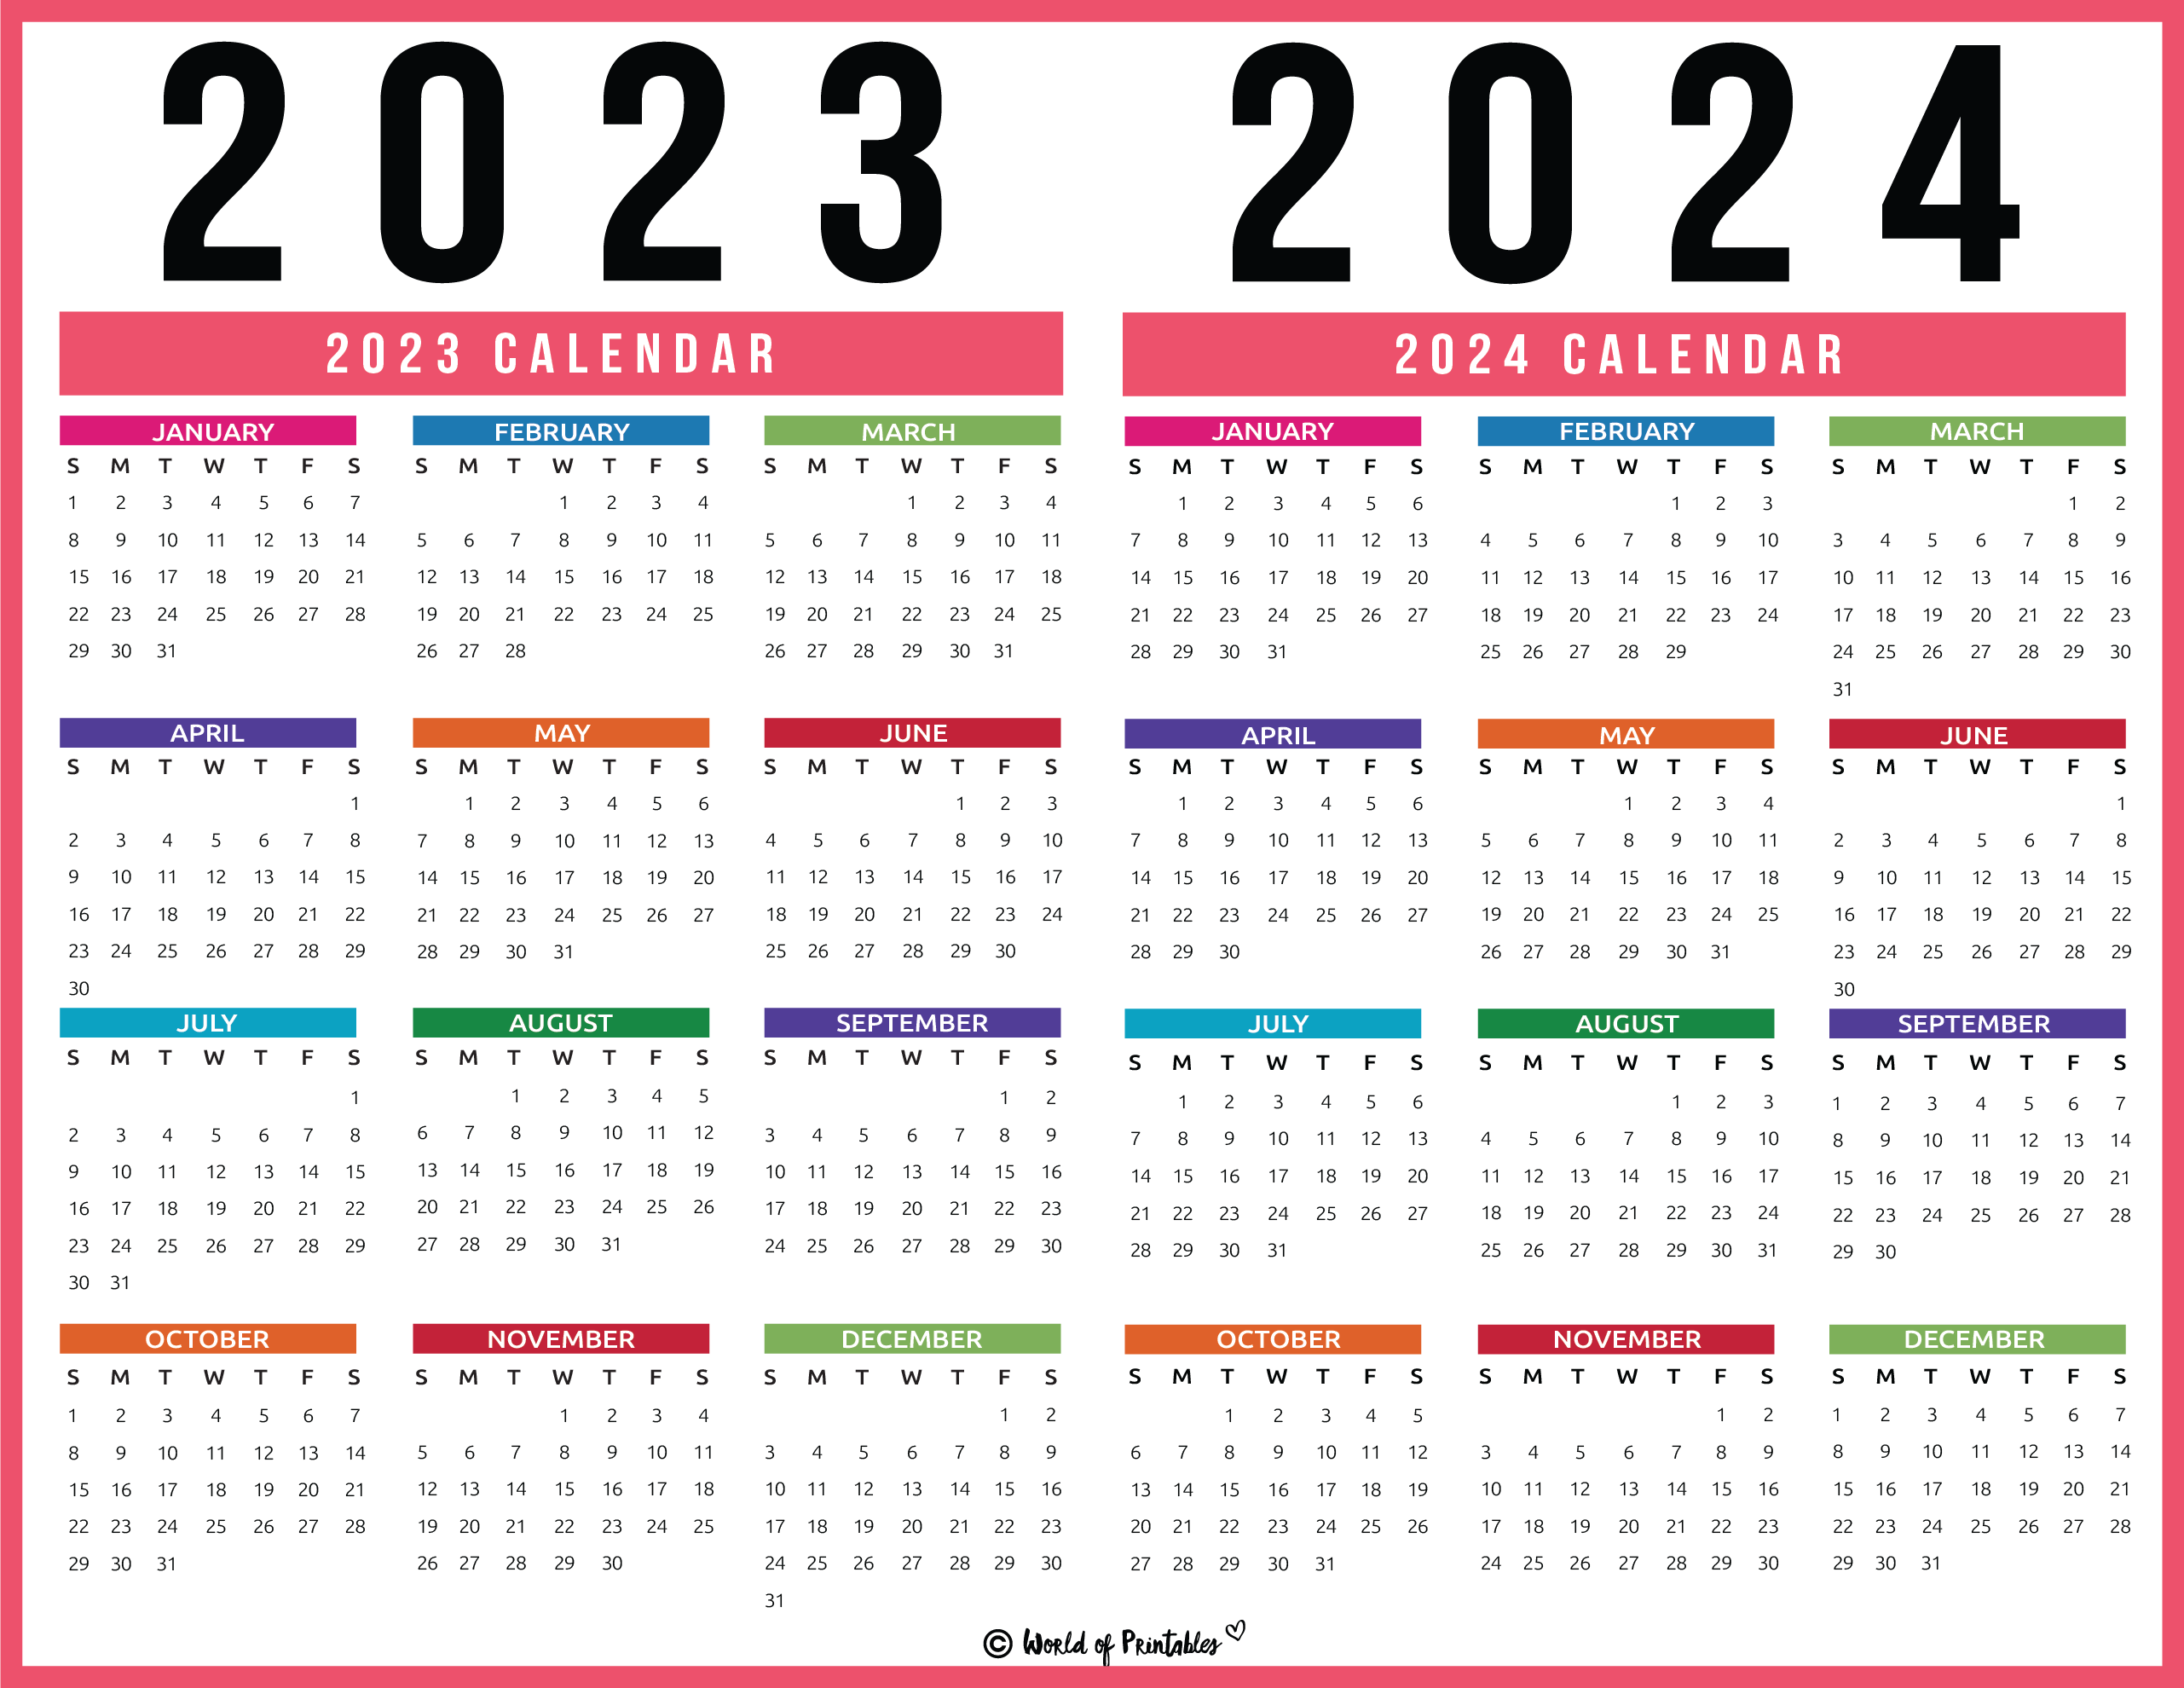 2023 2024 Calendar Free Printables - World Of Printables for Printable Calendar 2023 And 2024